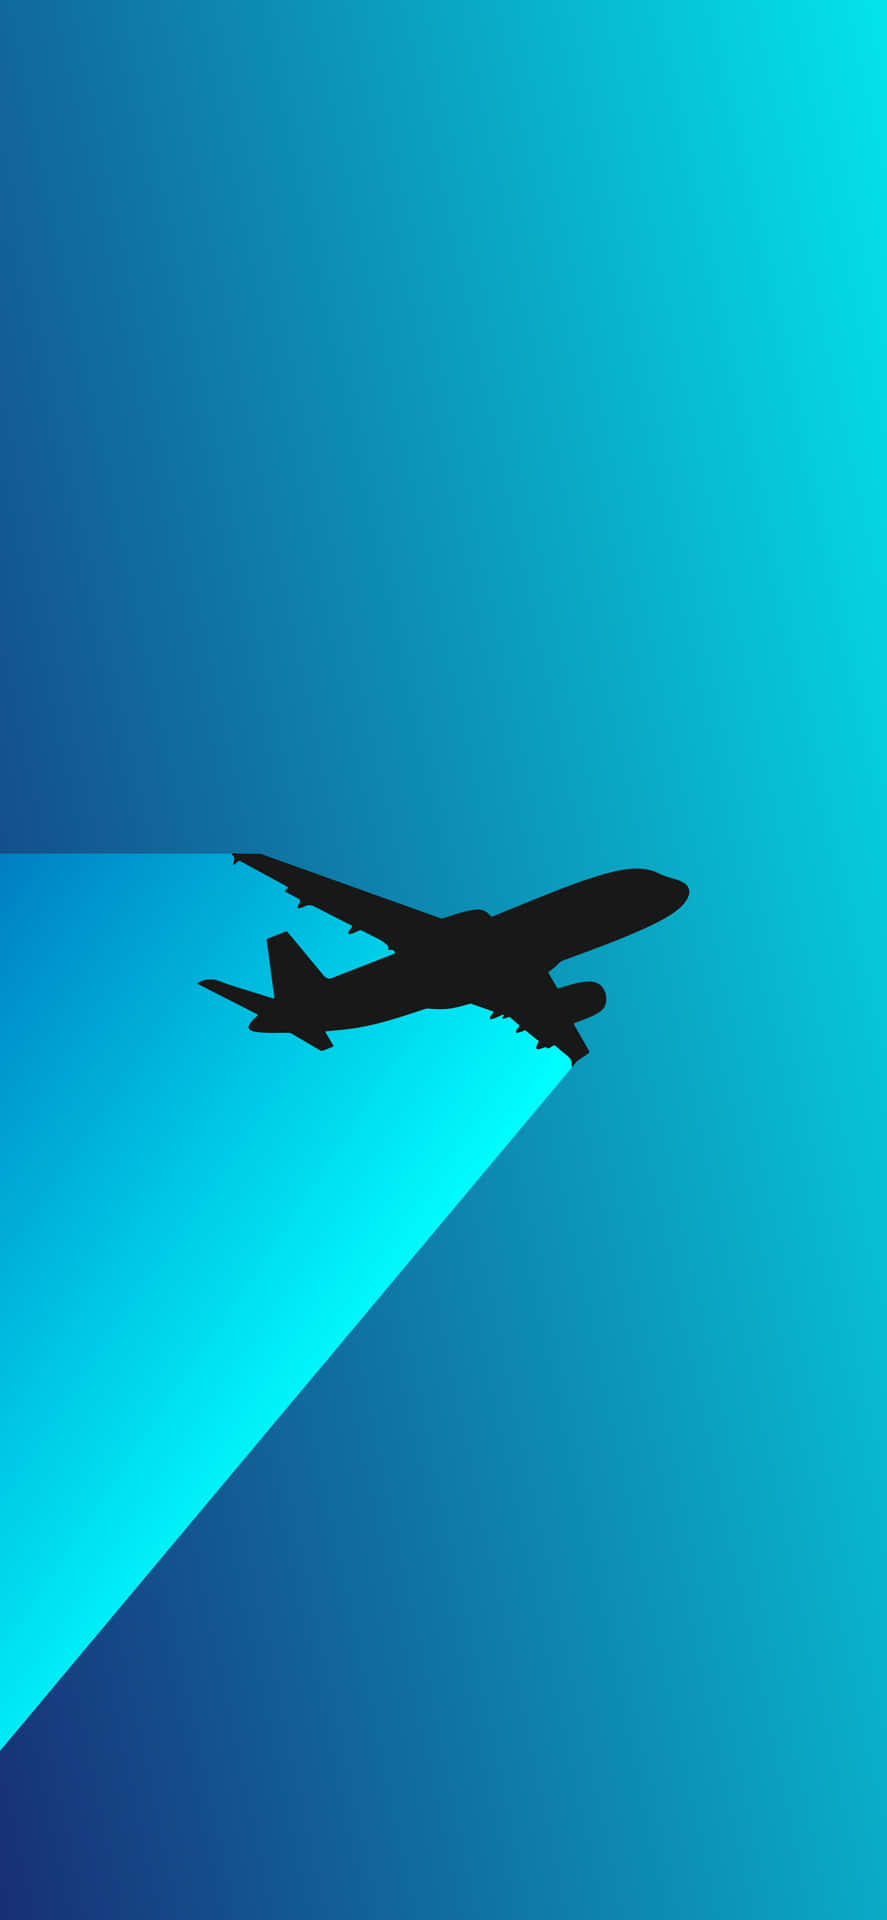 Airplane Silhouette Gradient Background Wallpaper